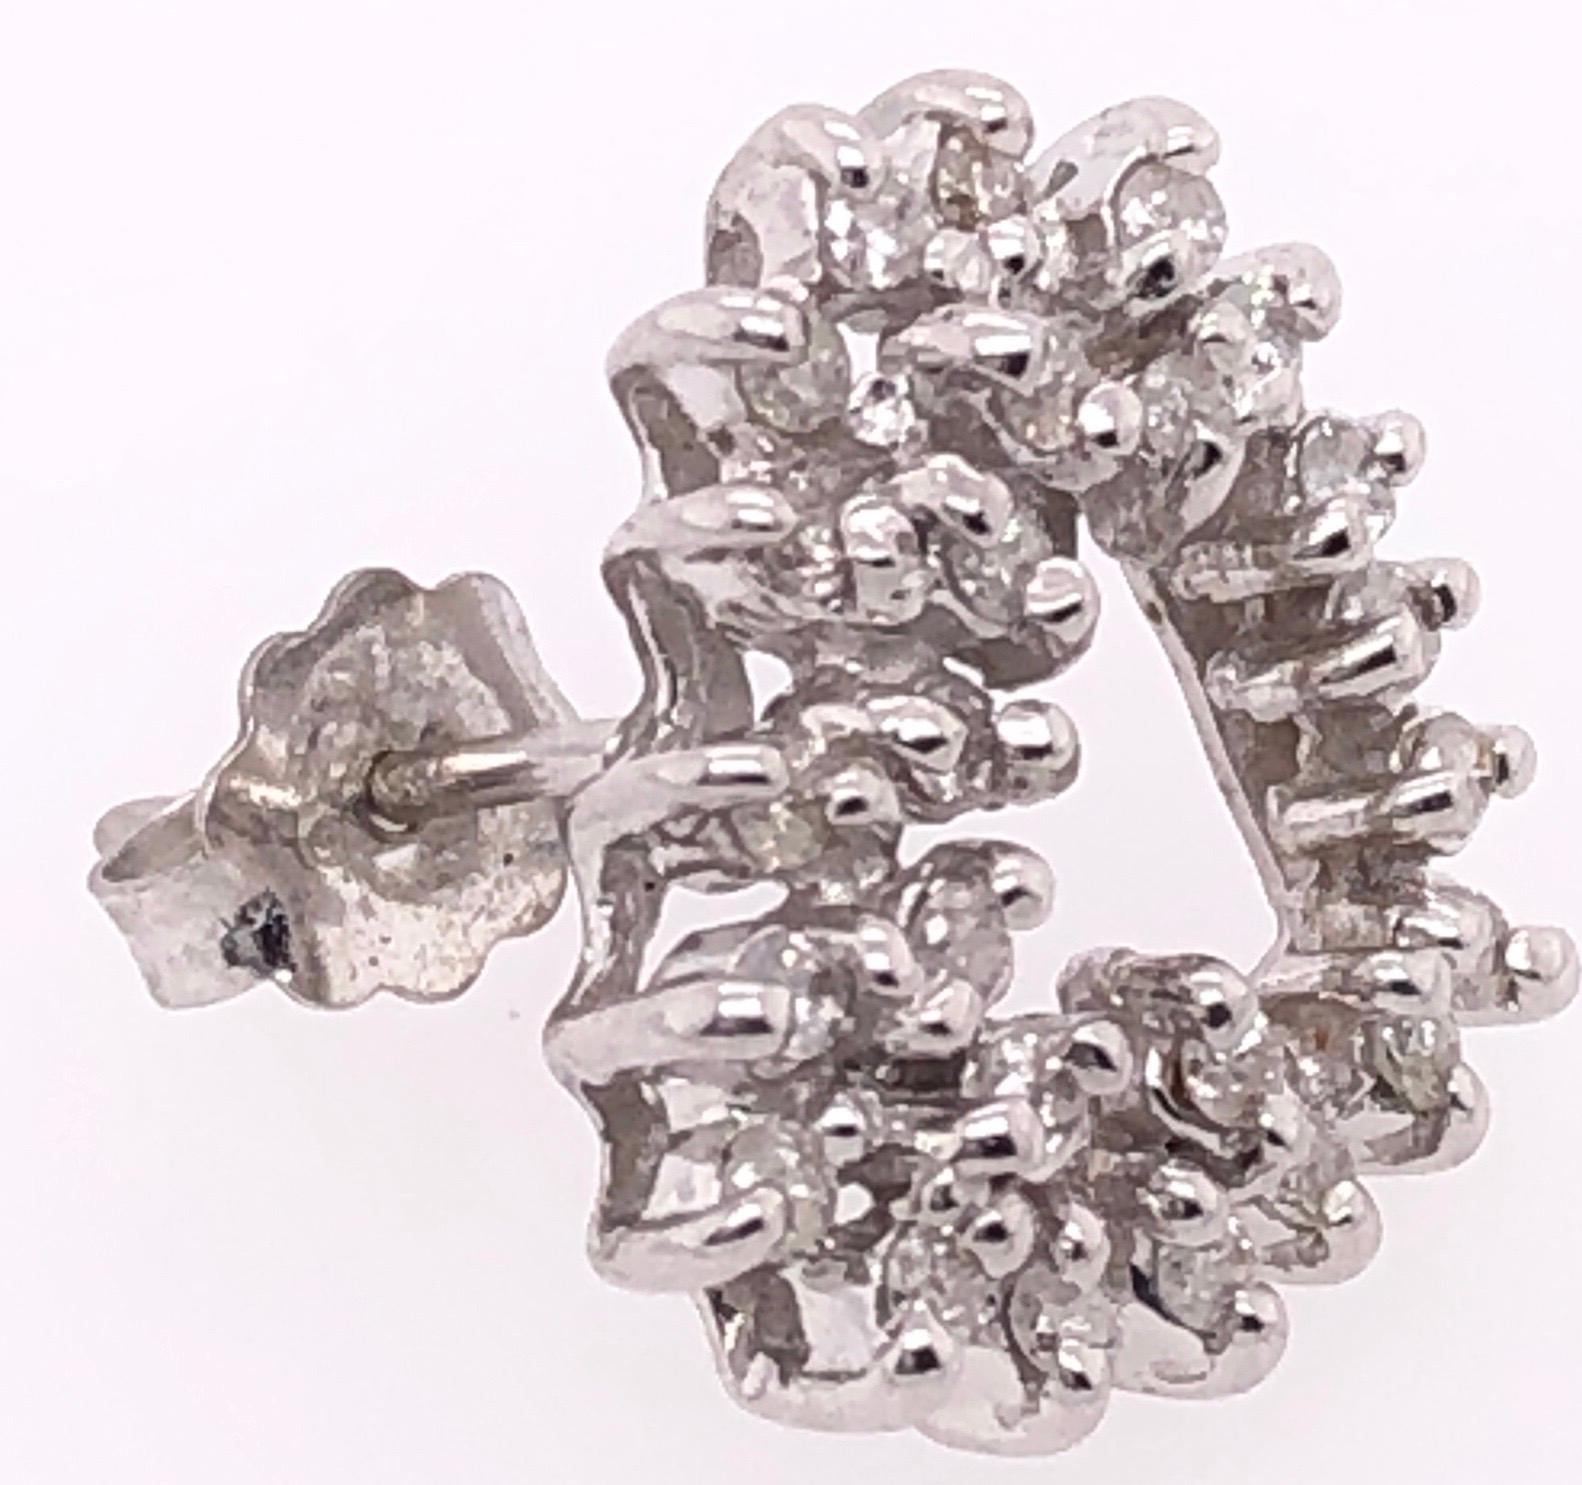 14 Karat White Gold Diamond Encrusted Heart Button / Stud Earrings
3.76 grams total weight.